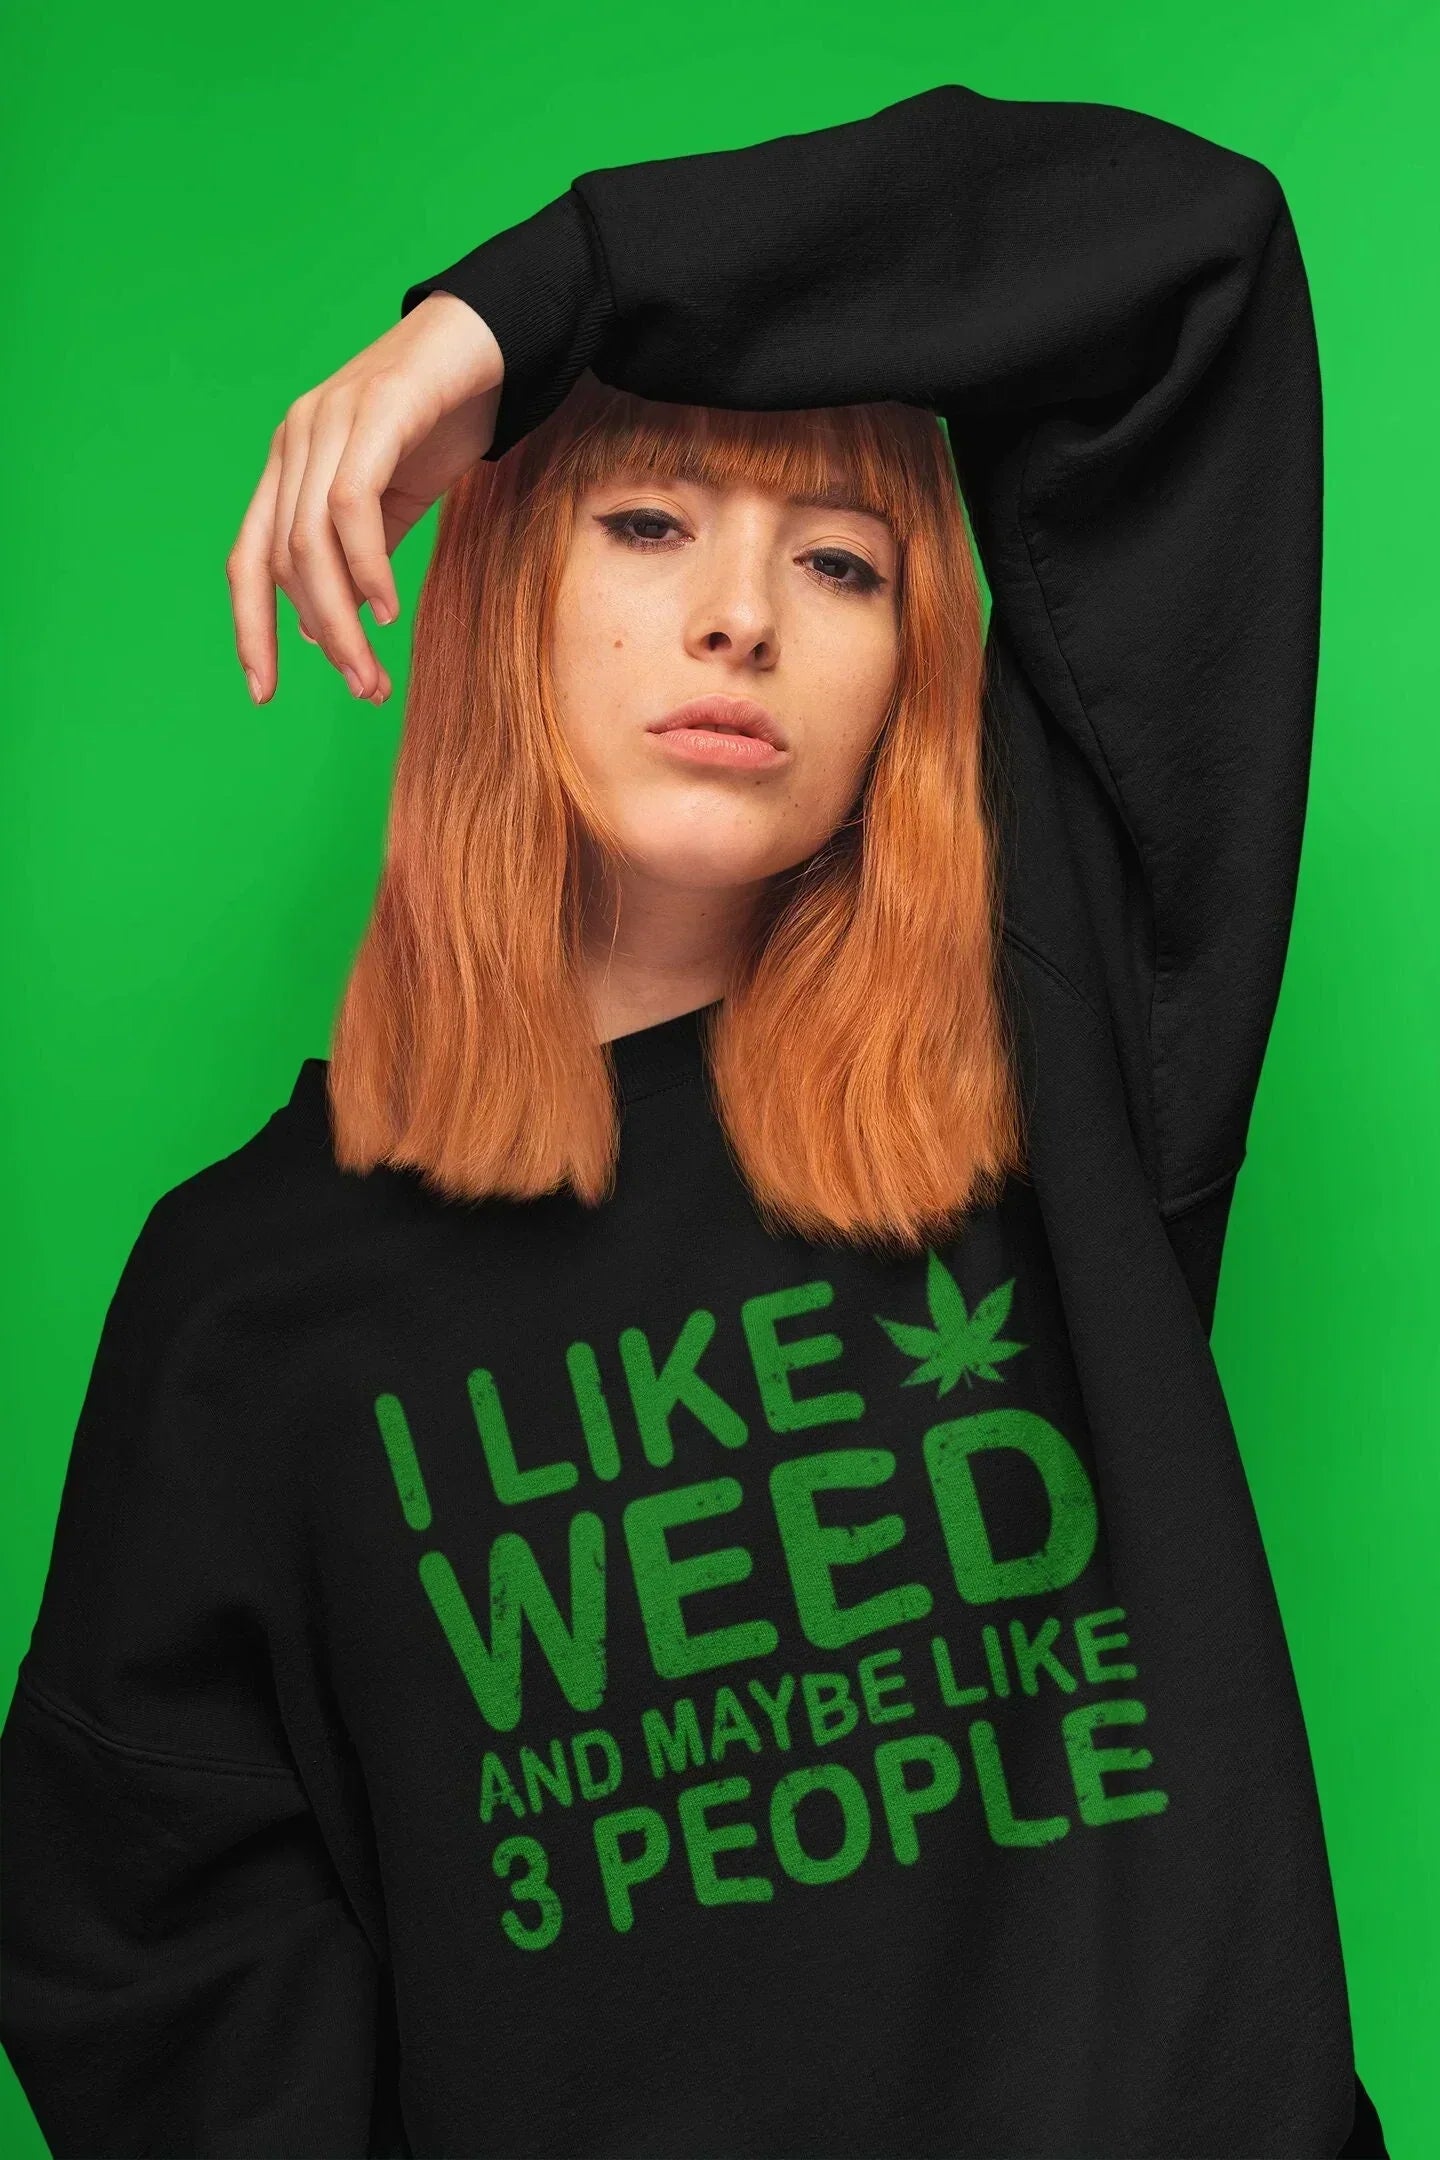 I Like Weed And Maybe 3 People, Stoner Shirt